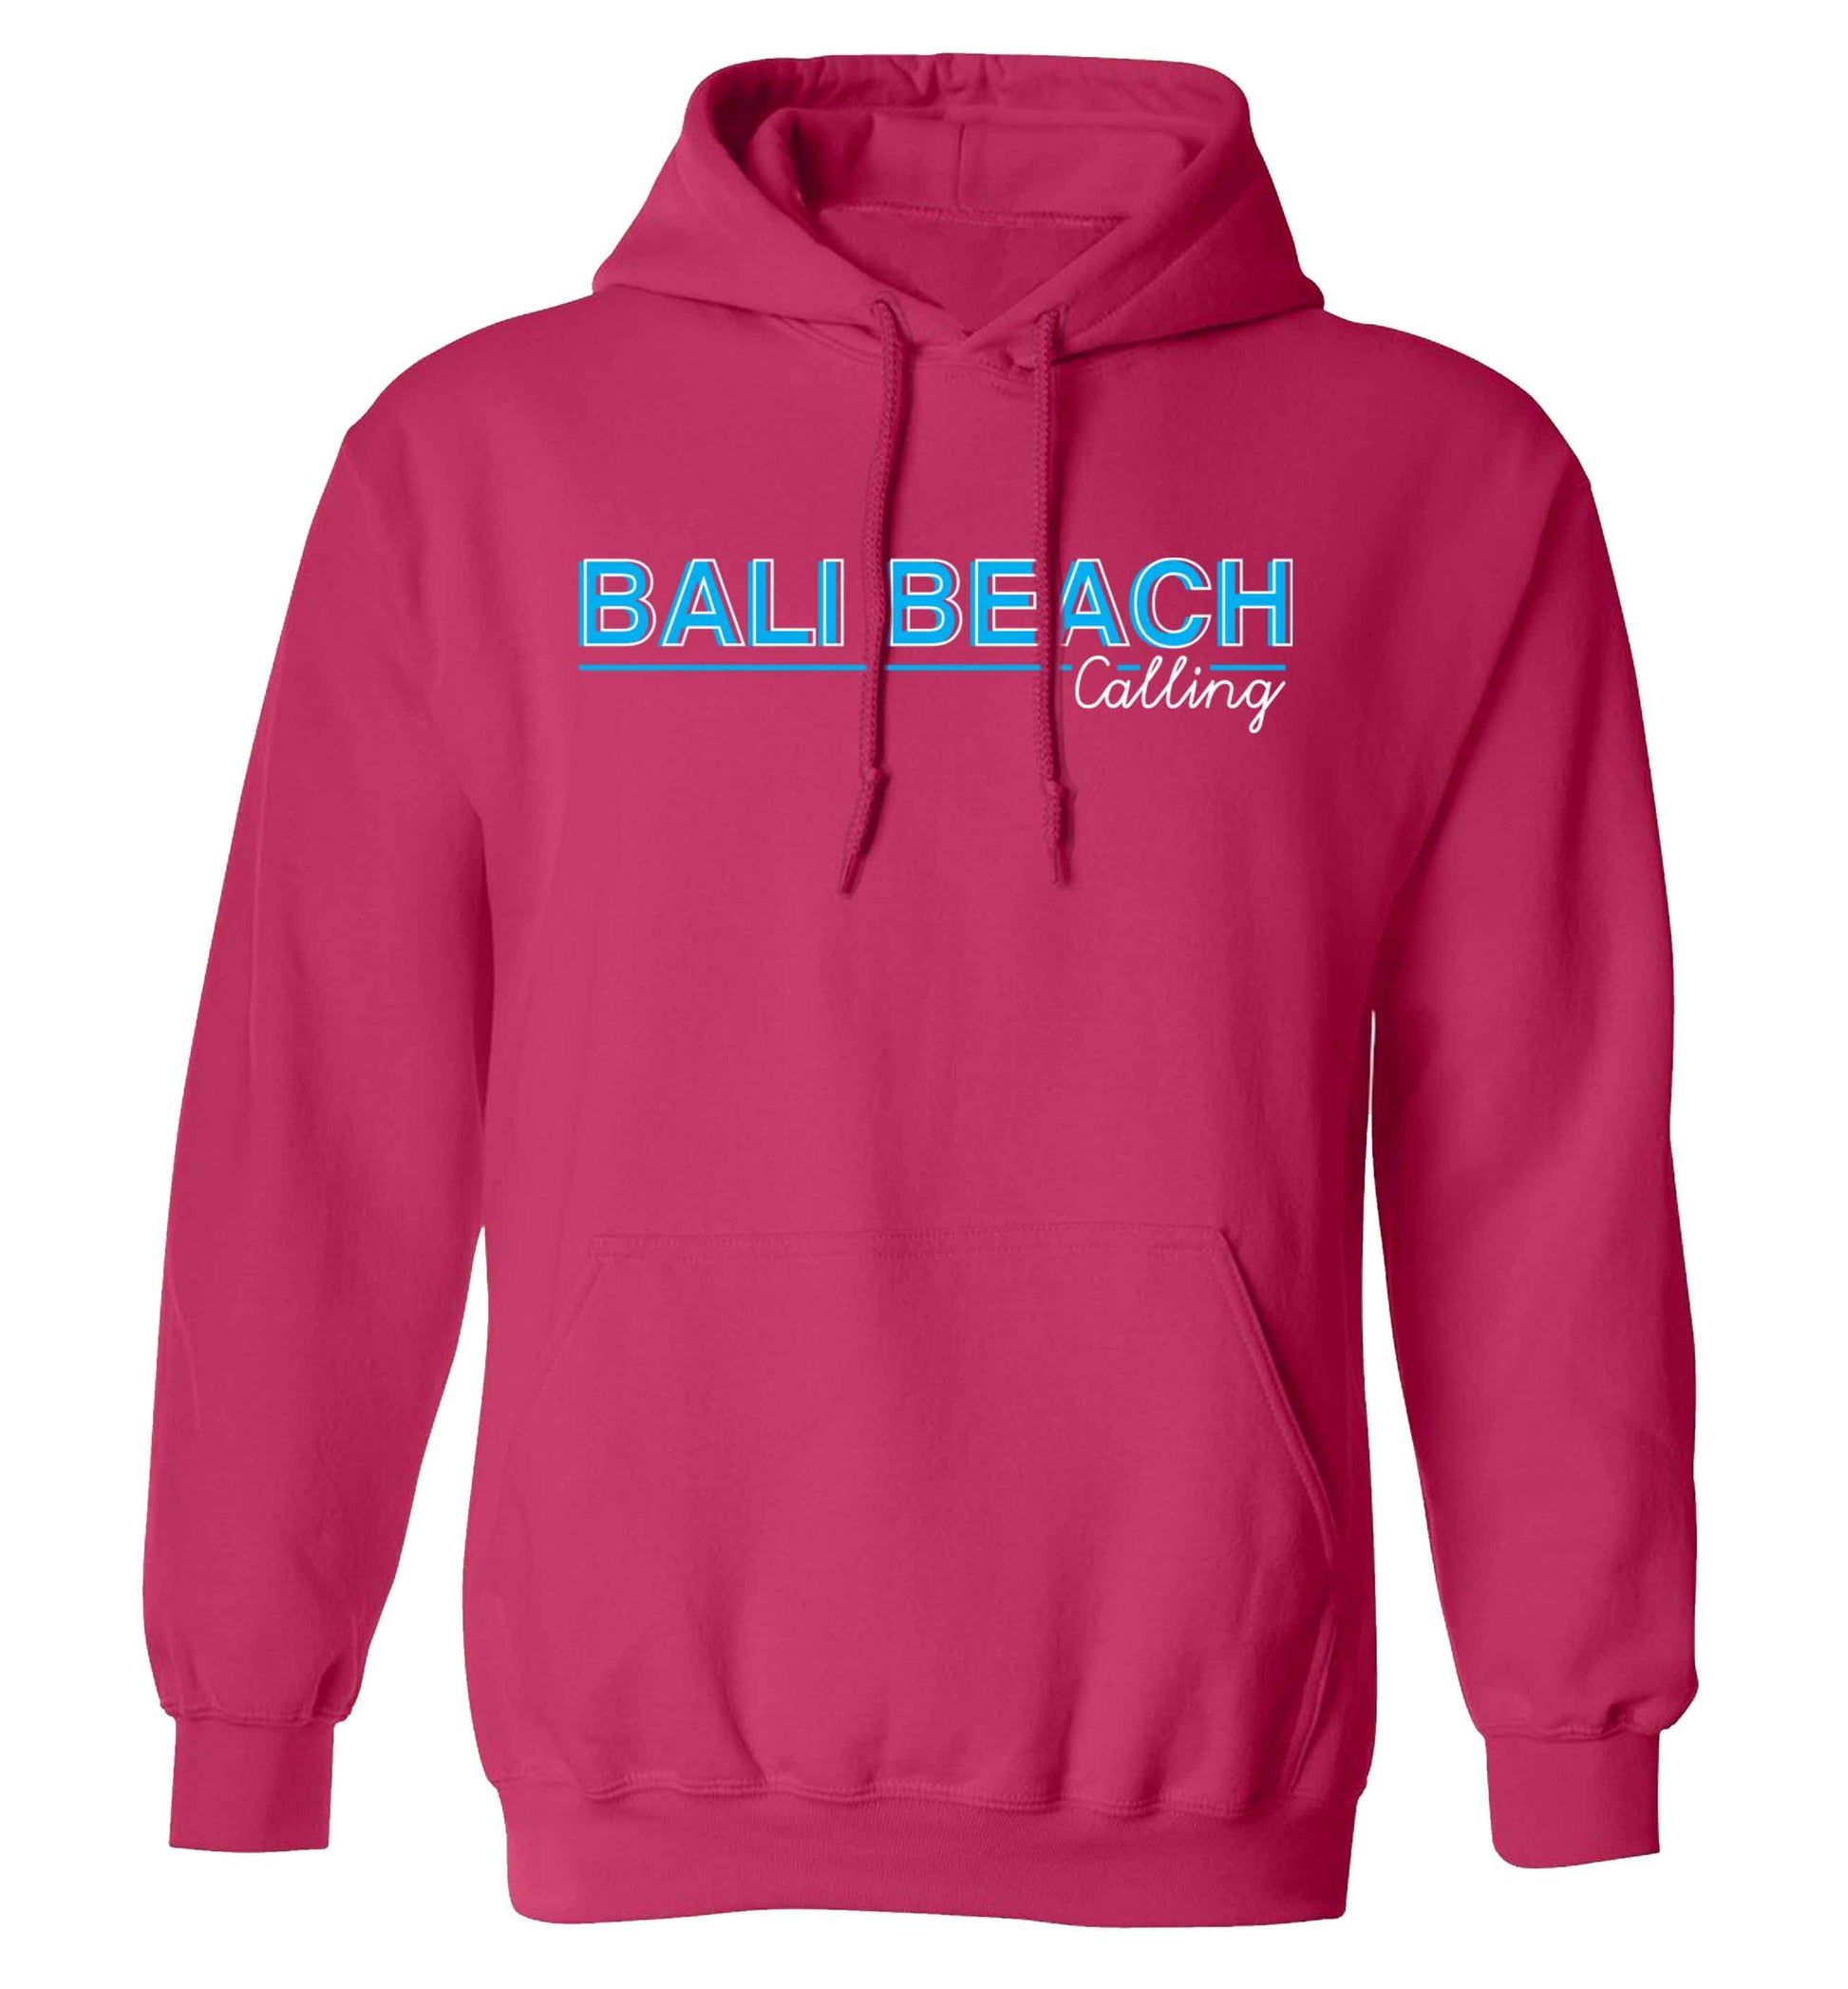 Bali beach calling adults unisex pink hoodie 2XL